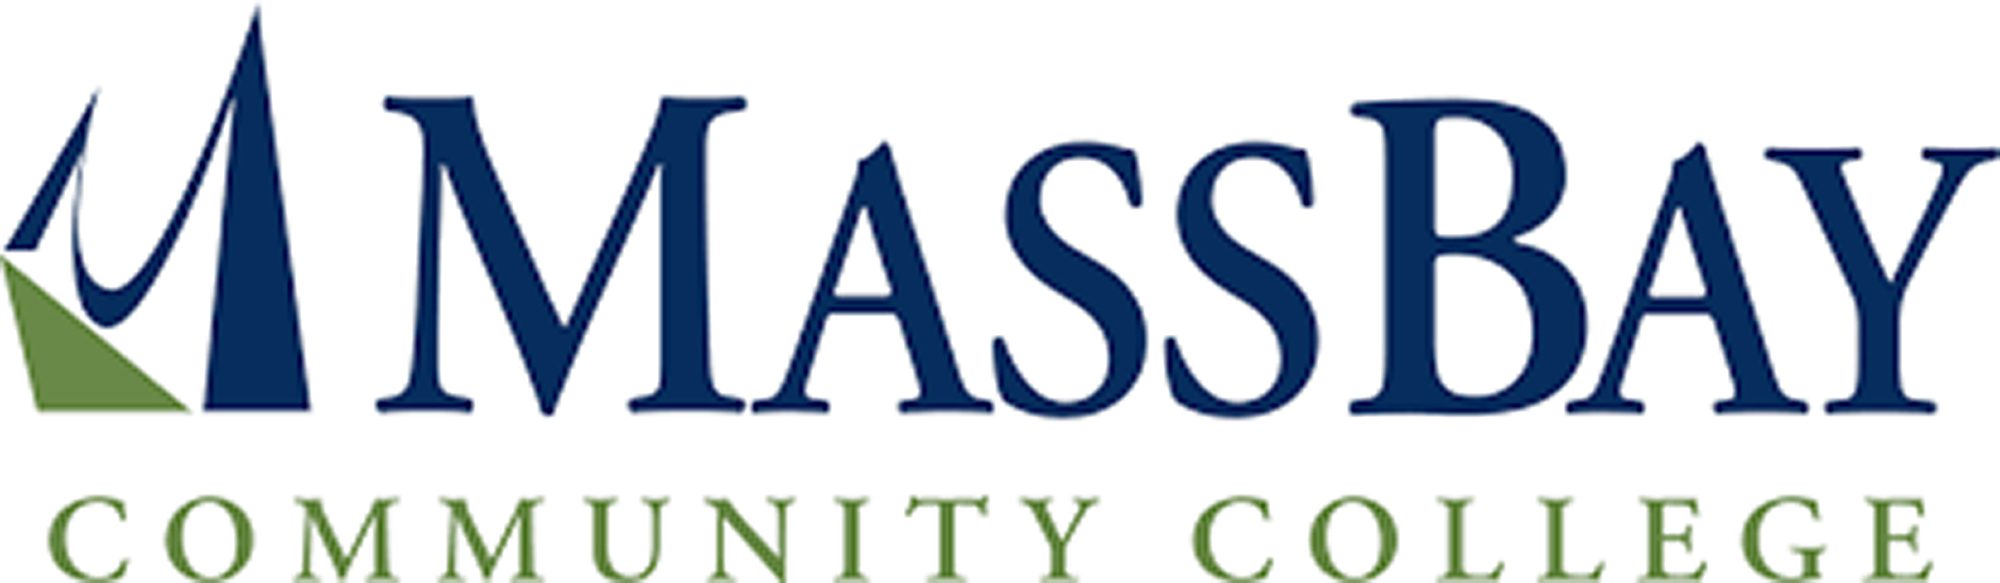 image of MassBay Community College logo